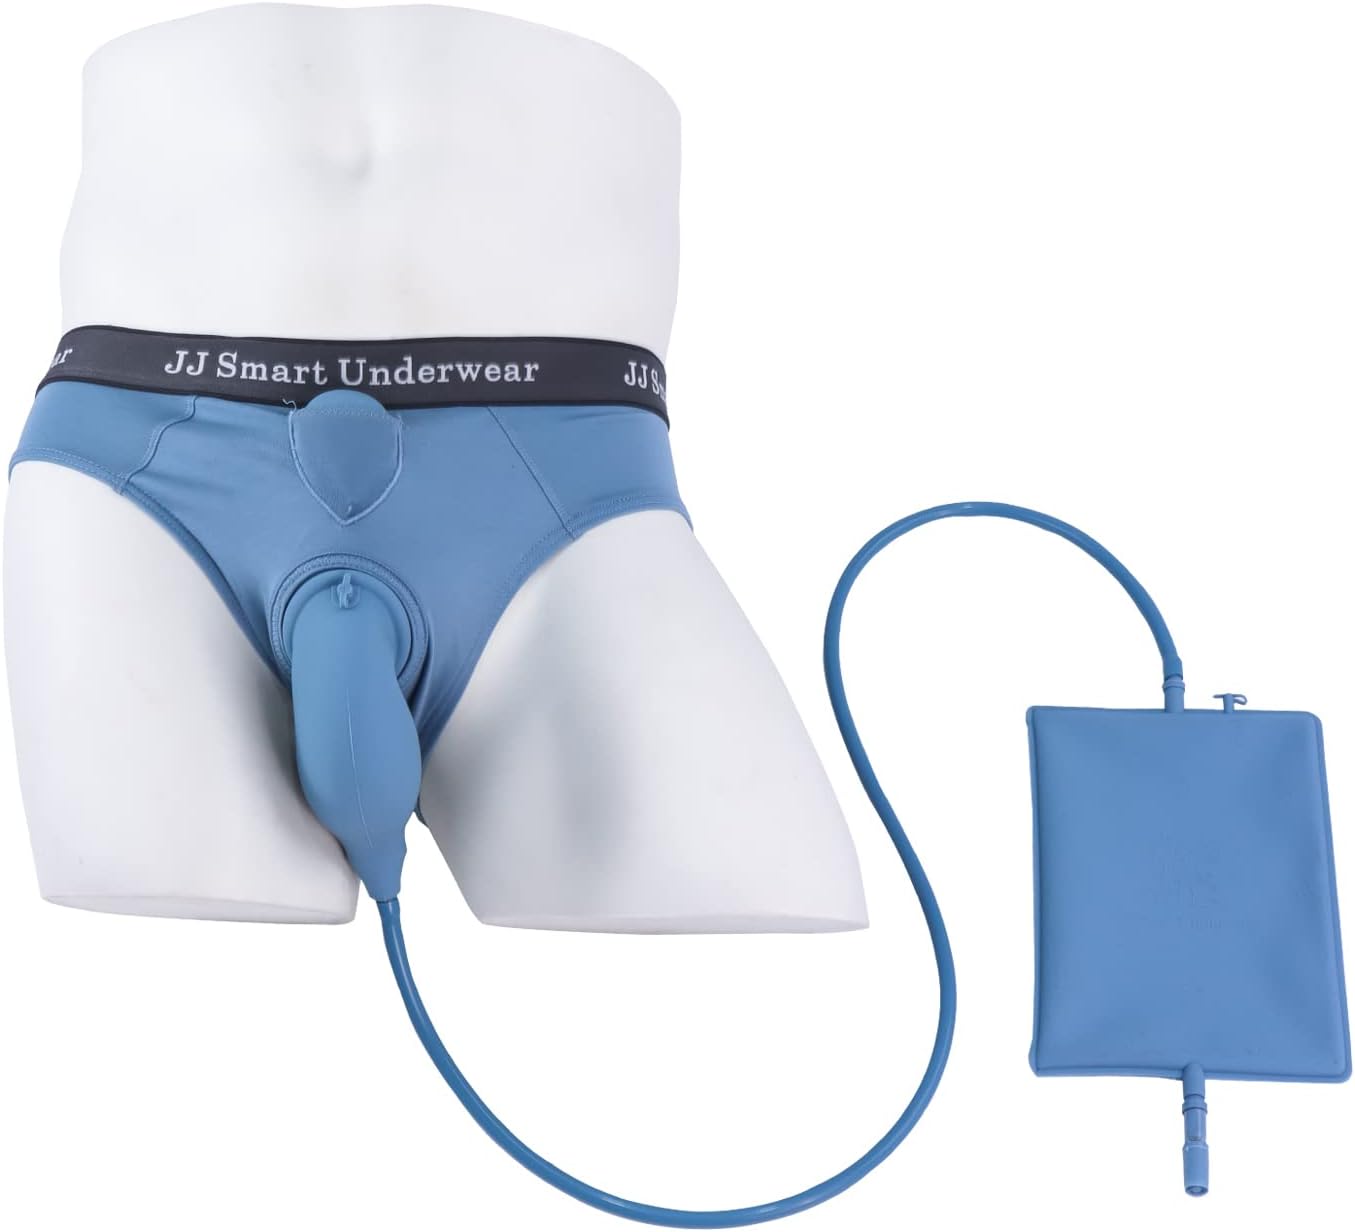 JJ SMART] 🔥HOT SALE🔥Men's smart underwear, urinary incontinence care – JJ  Smart underwear